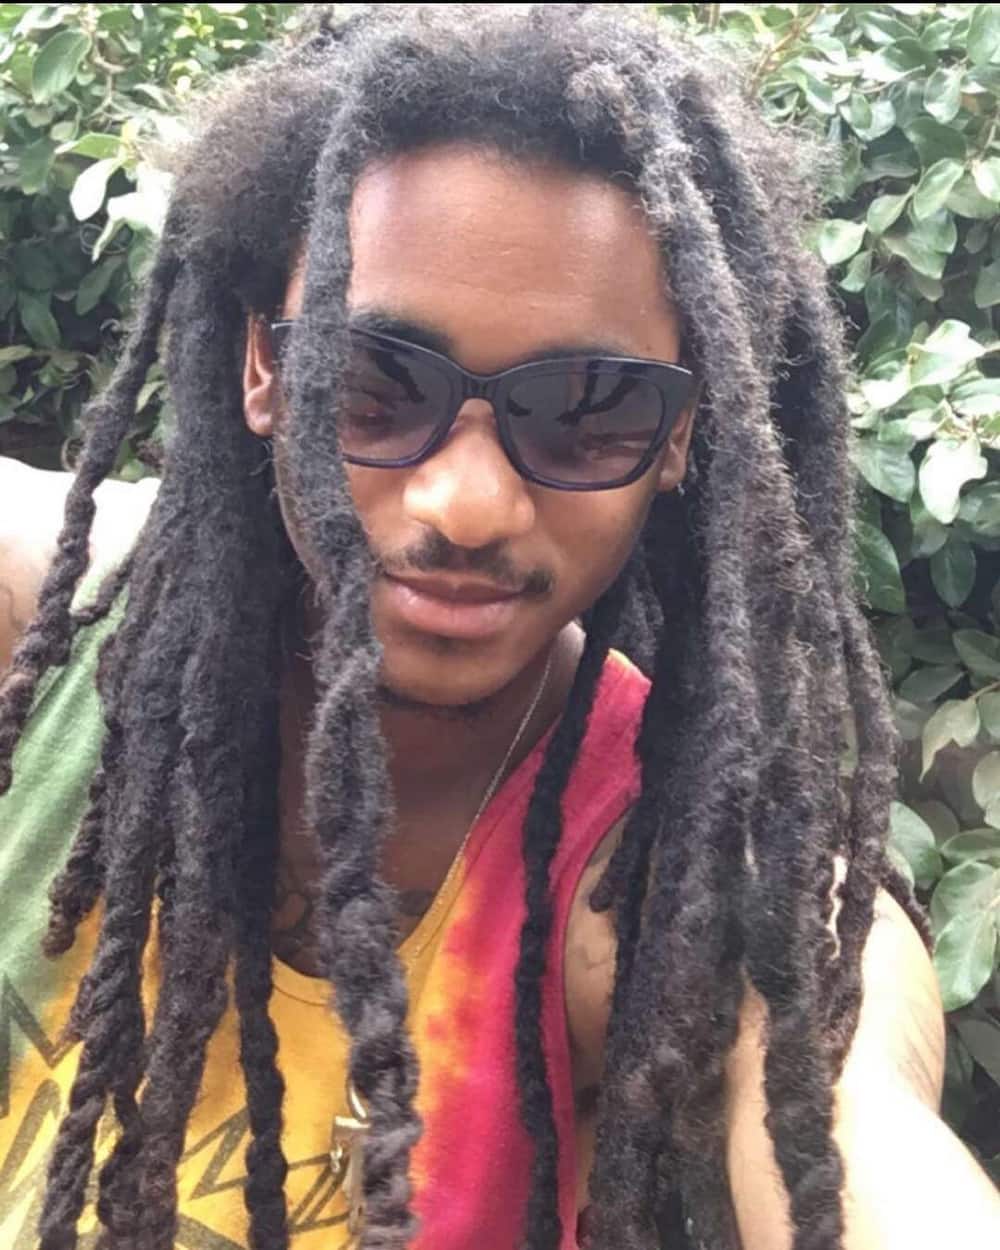 Snoop Dogg's son, Corde Broadus